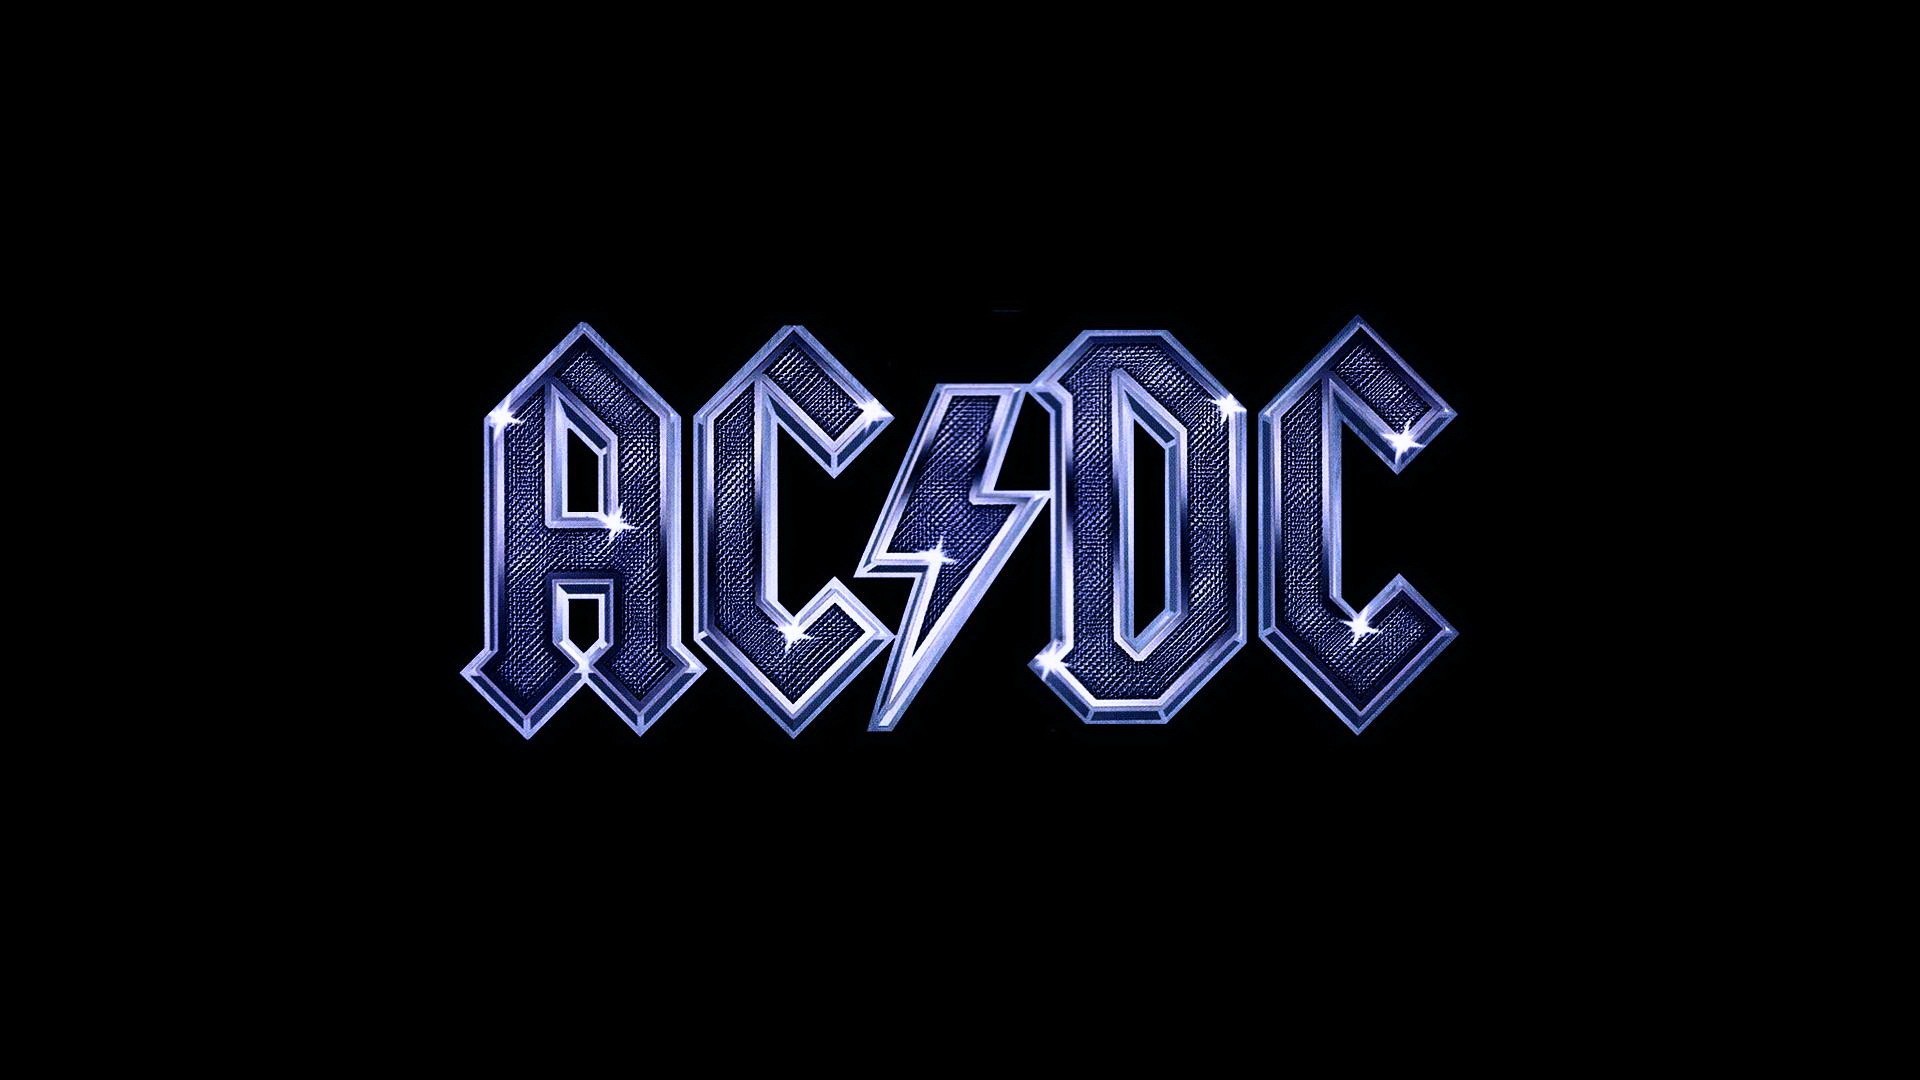 General 1920x1080 AC/DC black simple background rocks purple music logo black background band logo